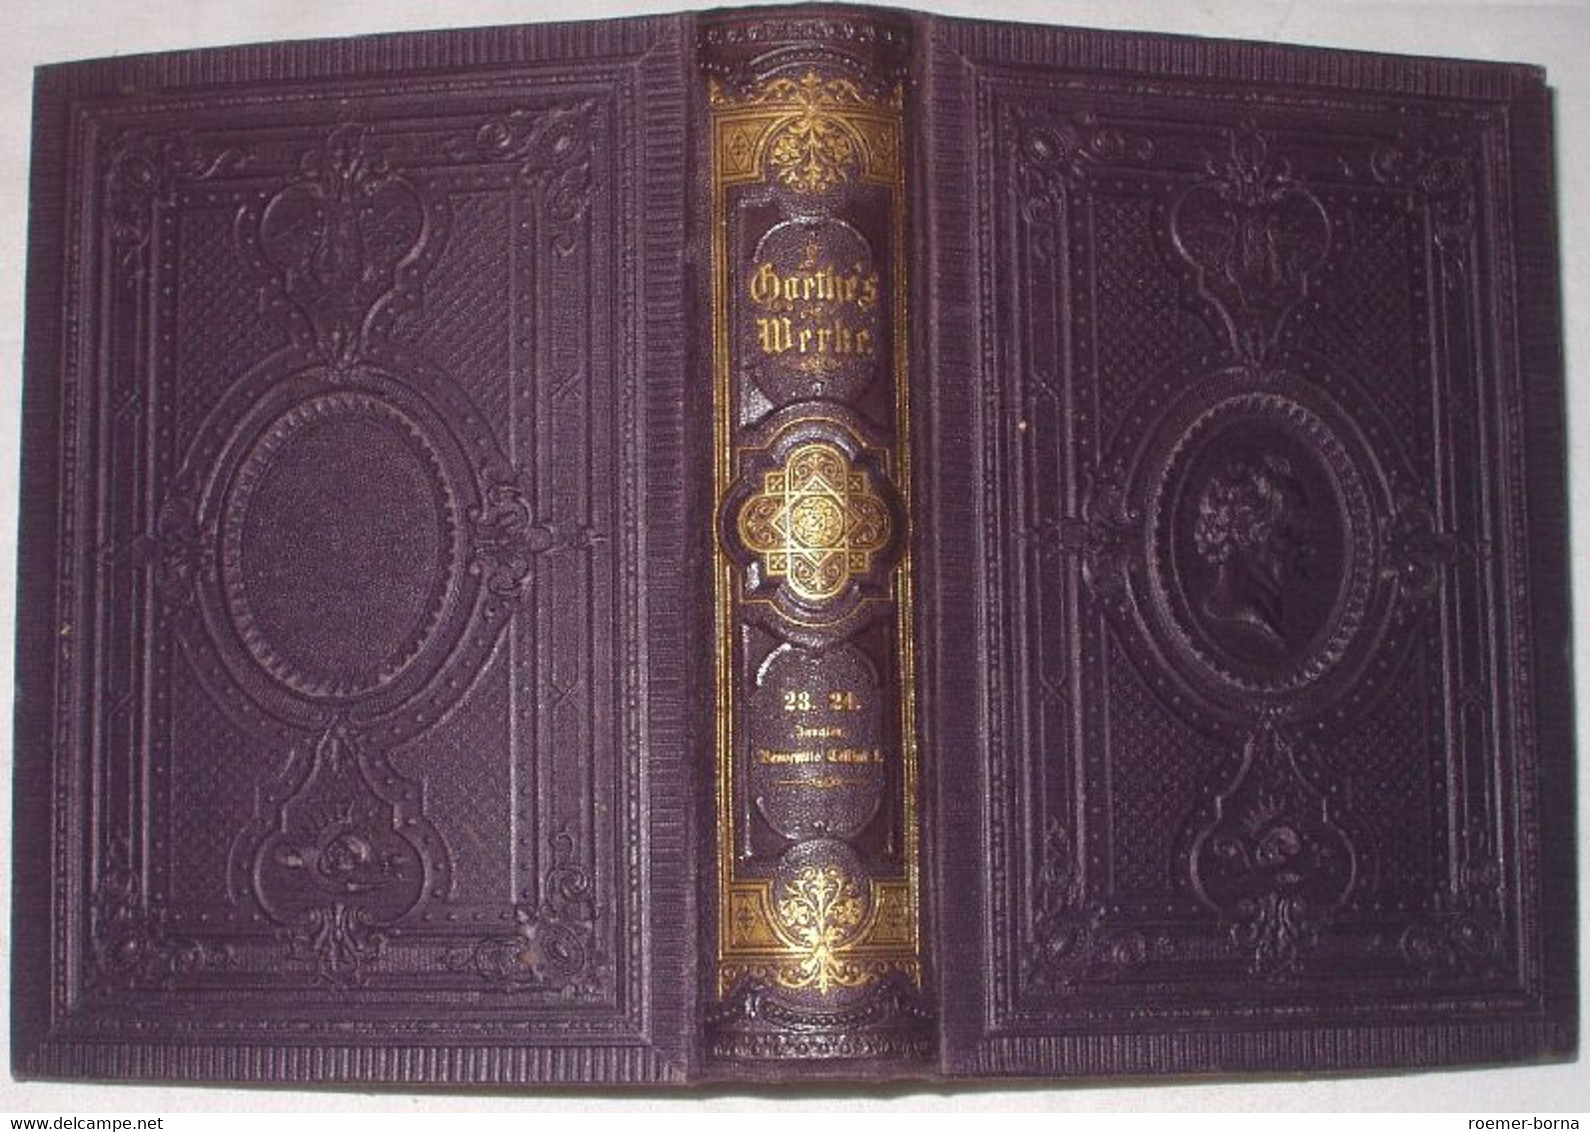 Goethes Werke - Poems & Essays